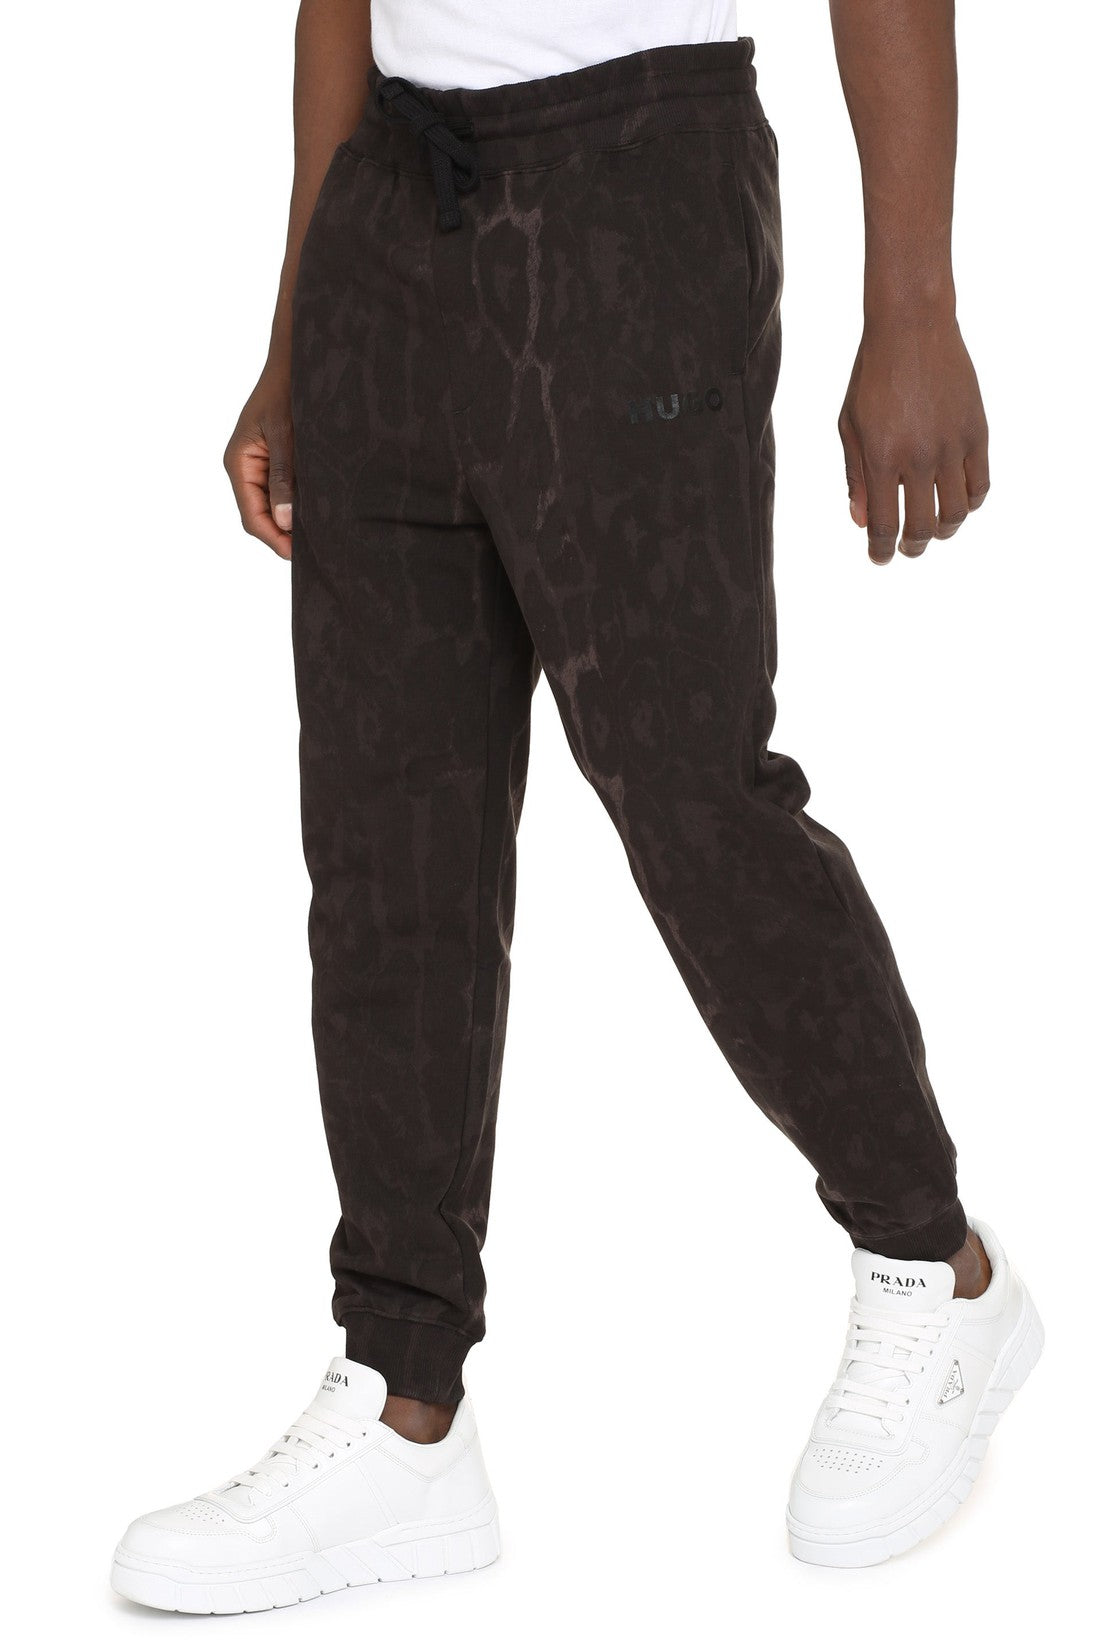 BOSS-OUTLET-SALE-Printed cotton track-pants-ARCHIVIST